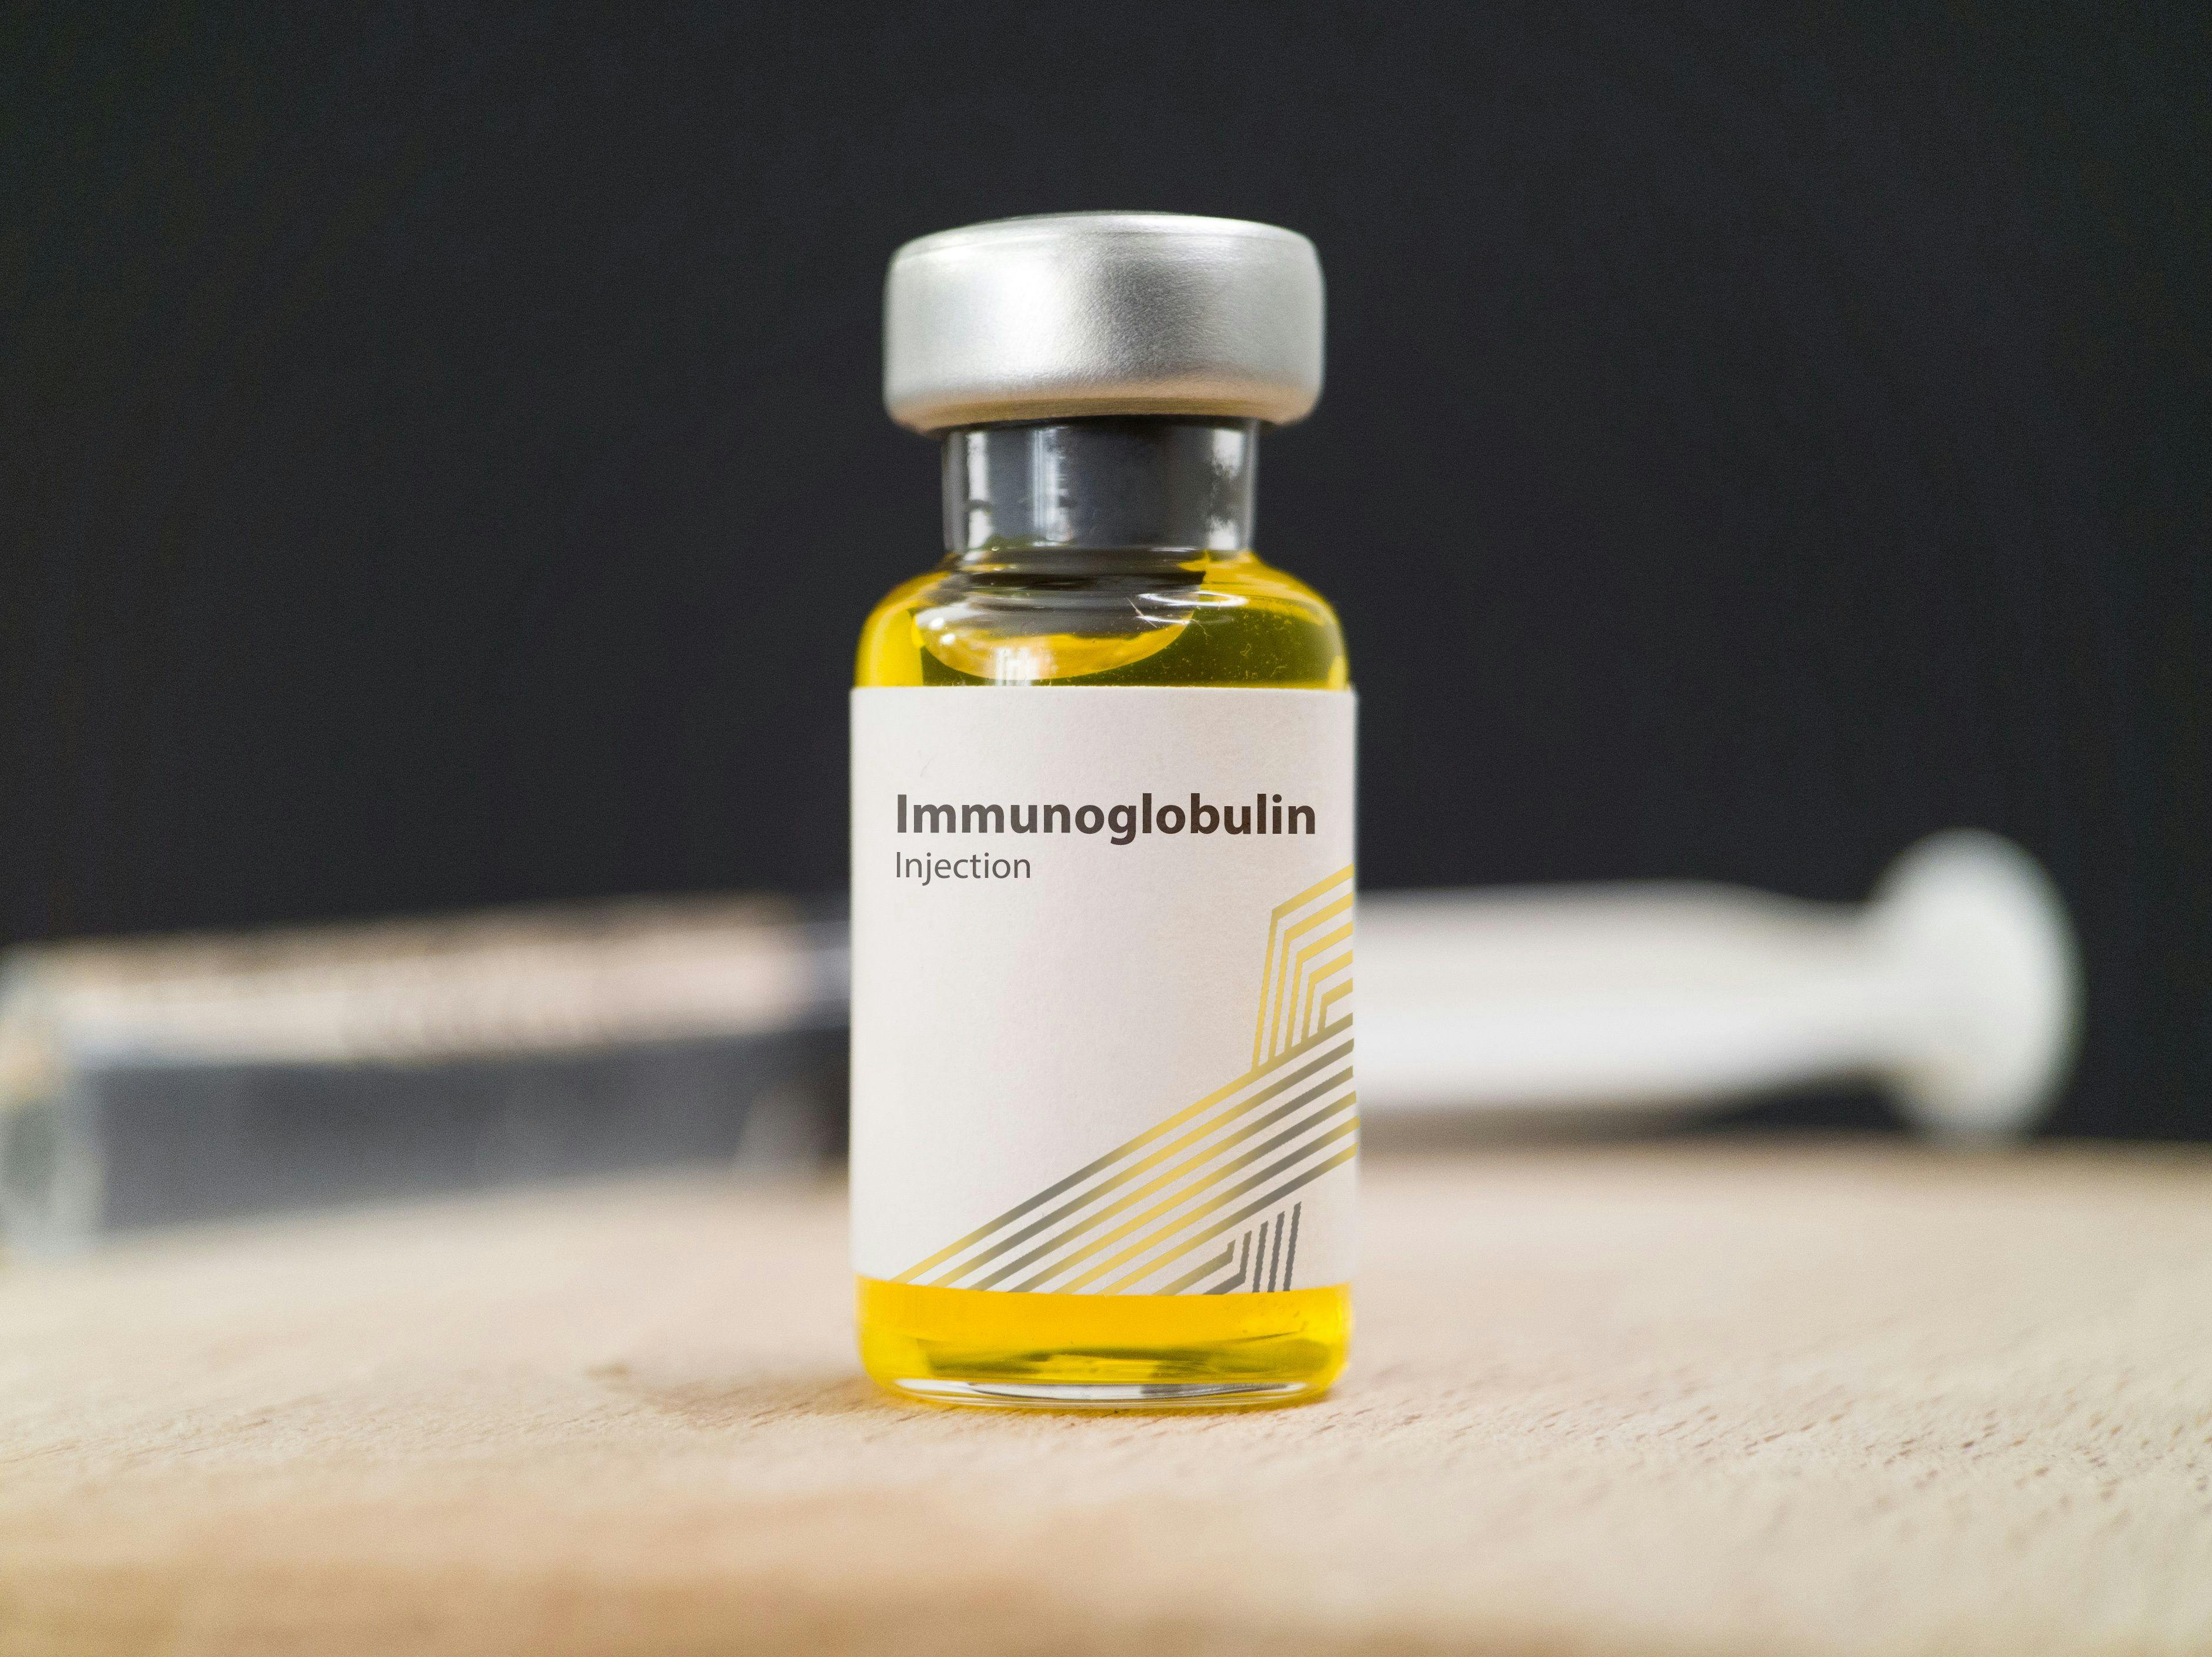 Immune globulin injection -- Image credit: Soni's | stock.adobe.com